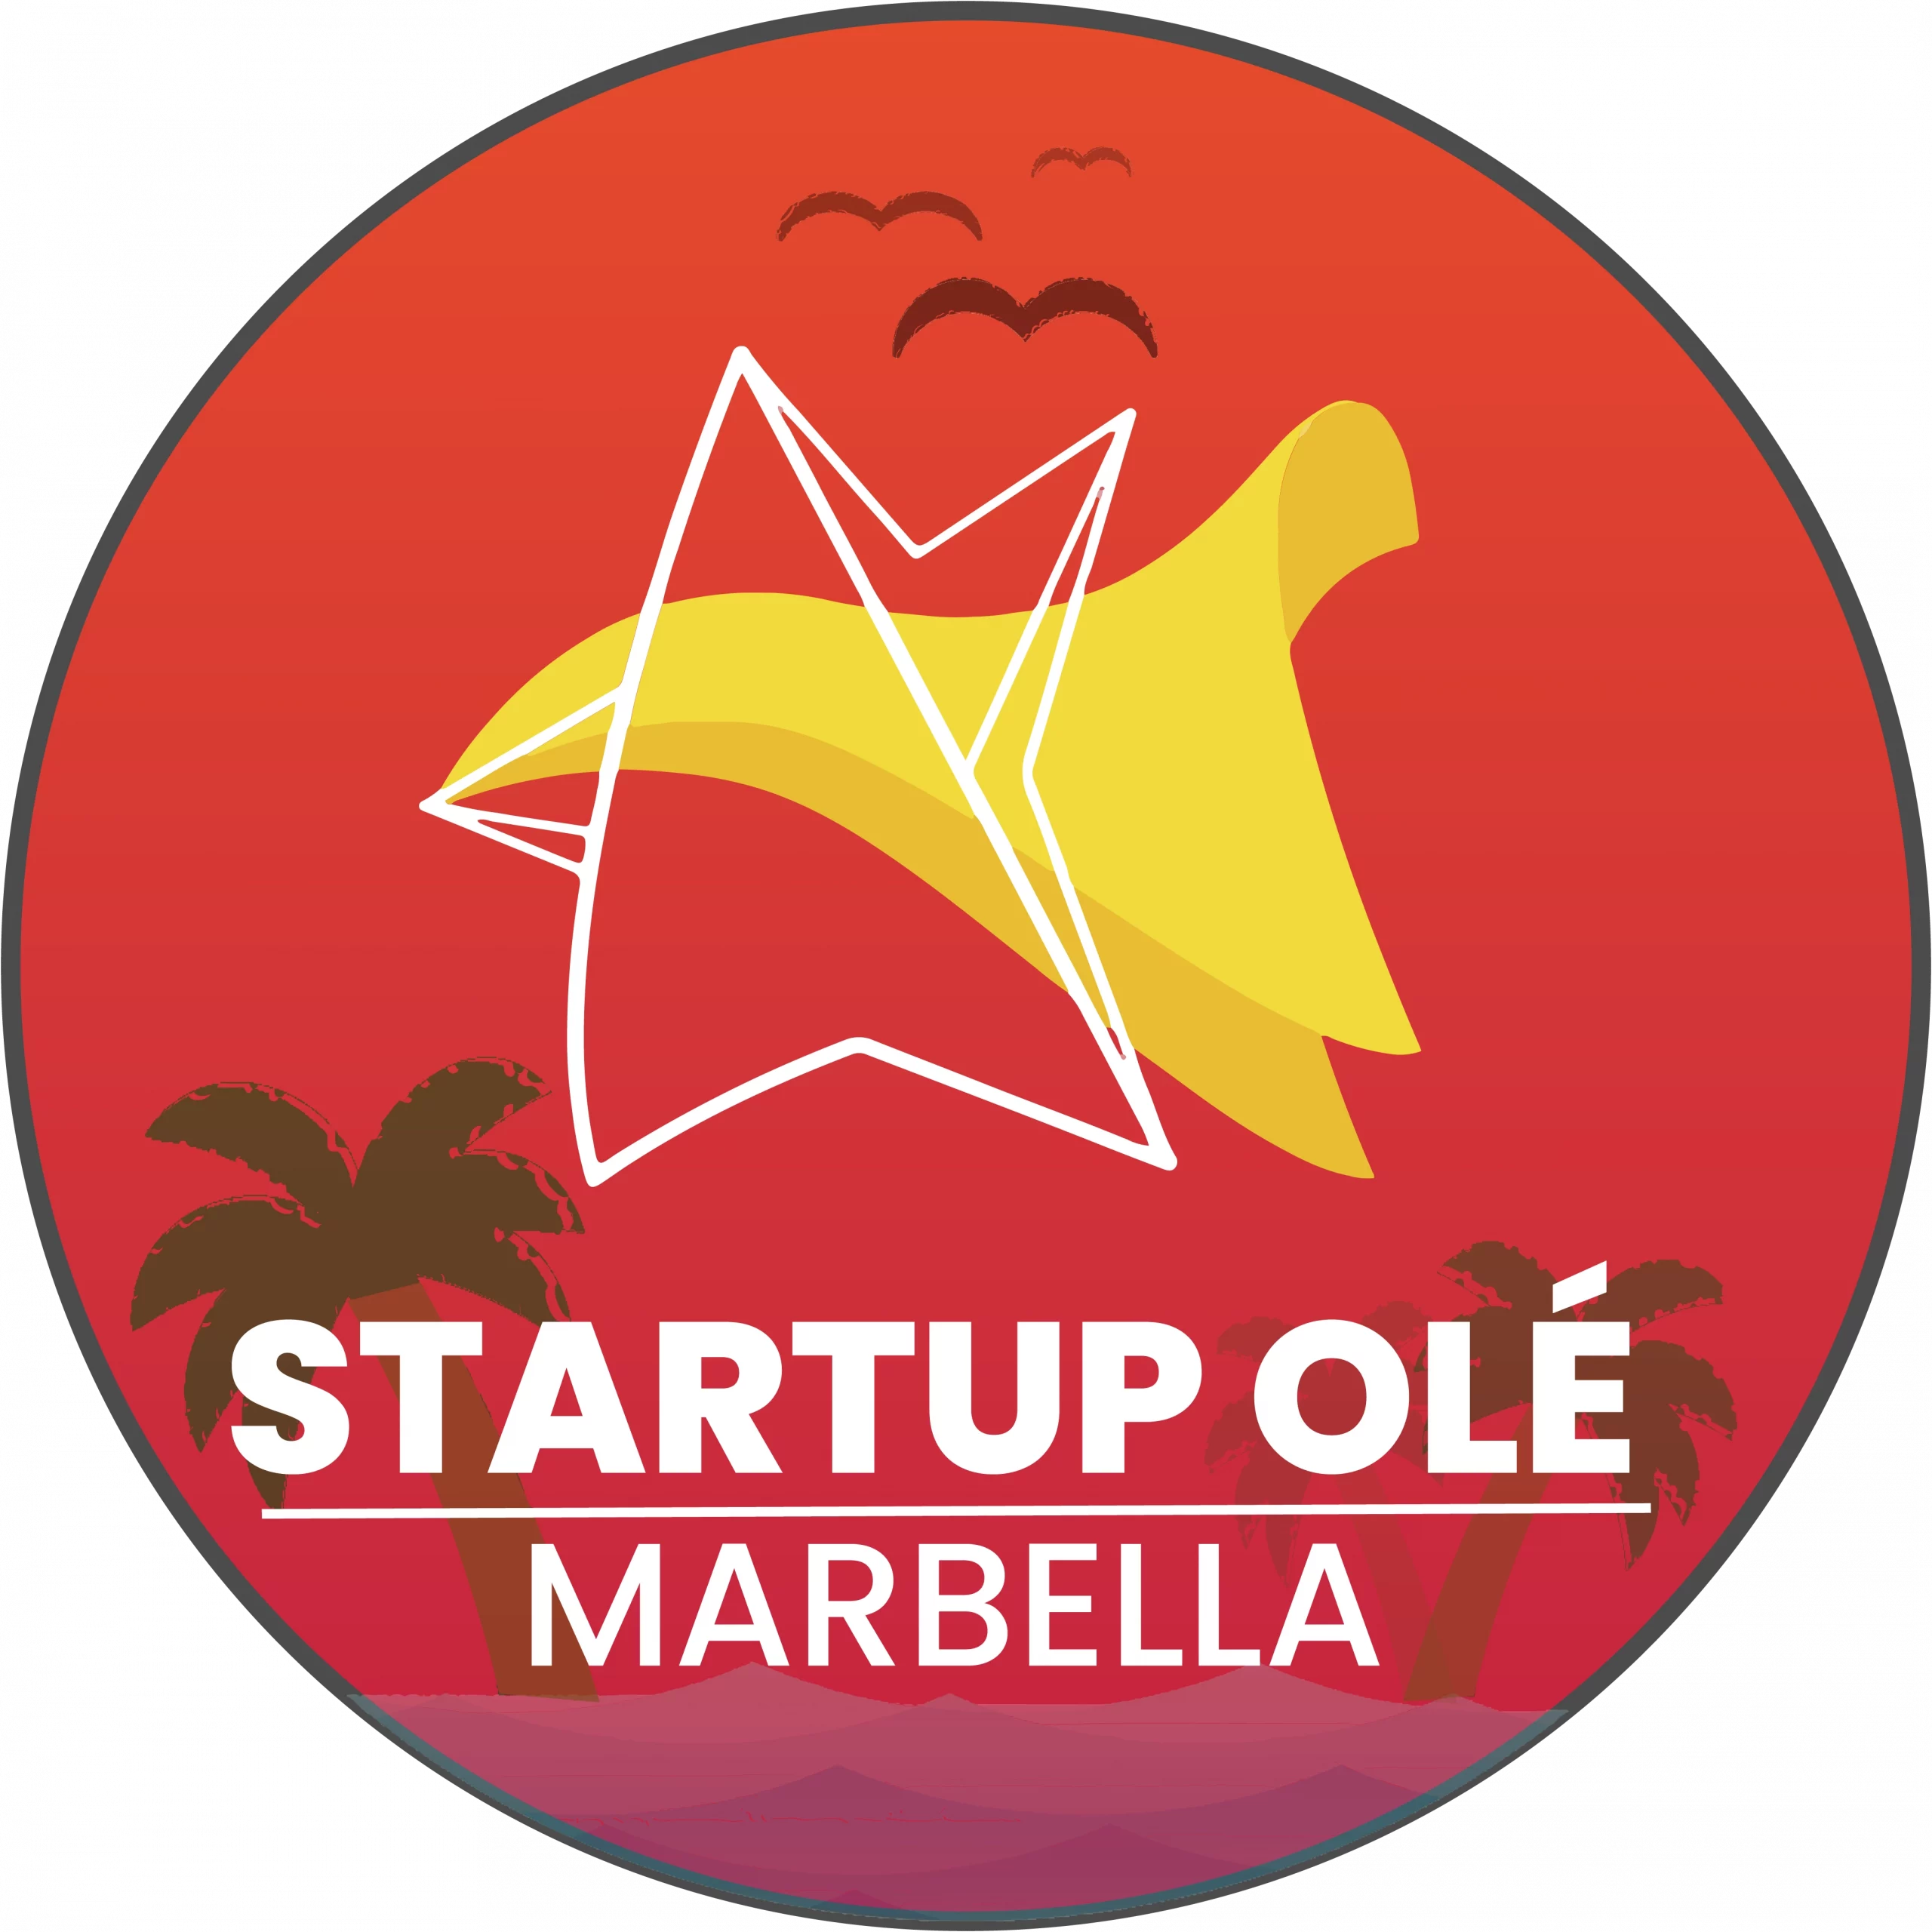 Startup-Ole-Marbella-Logo-copia-1-scaled-1.webp